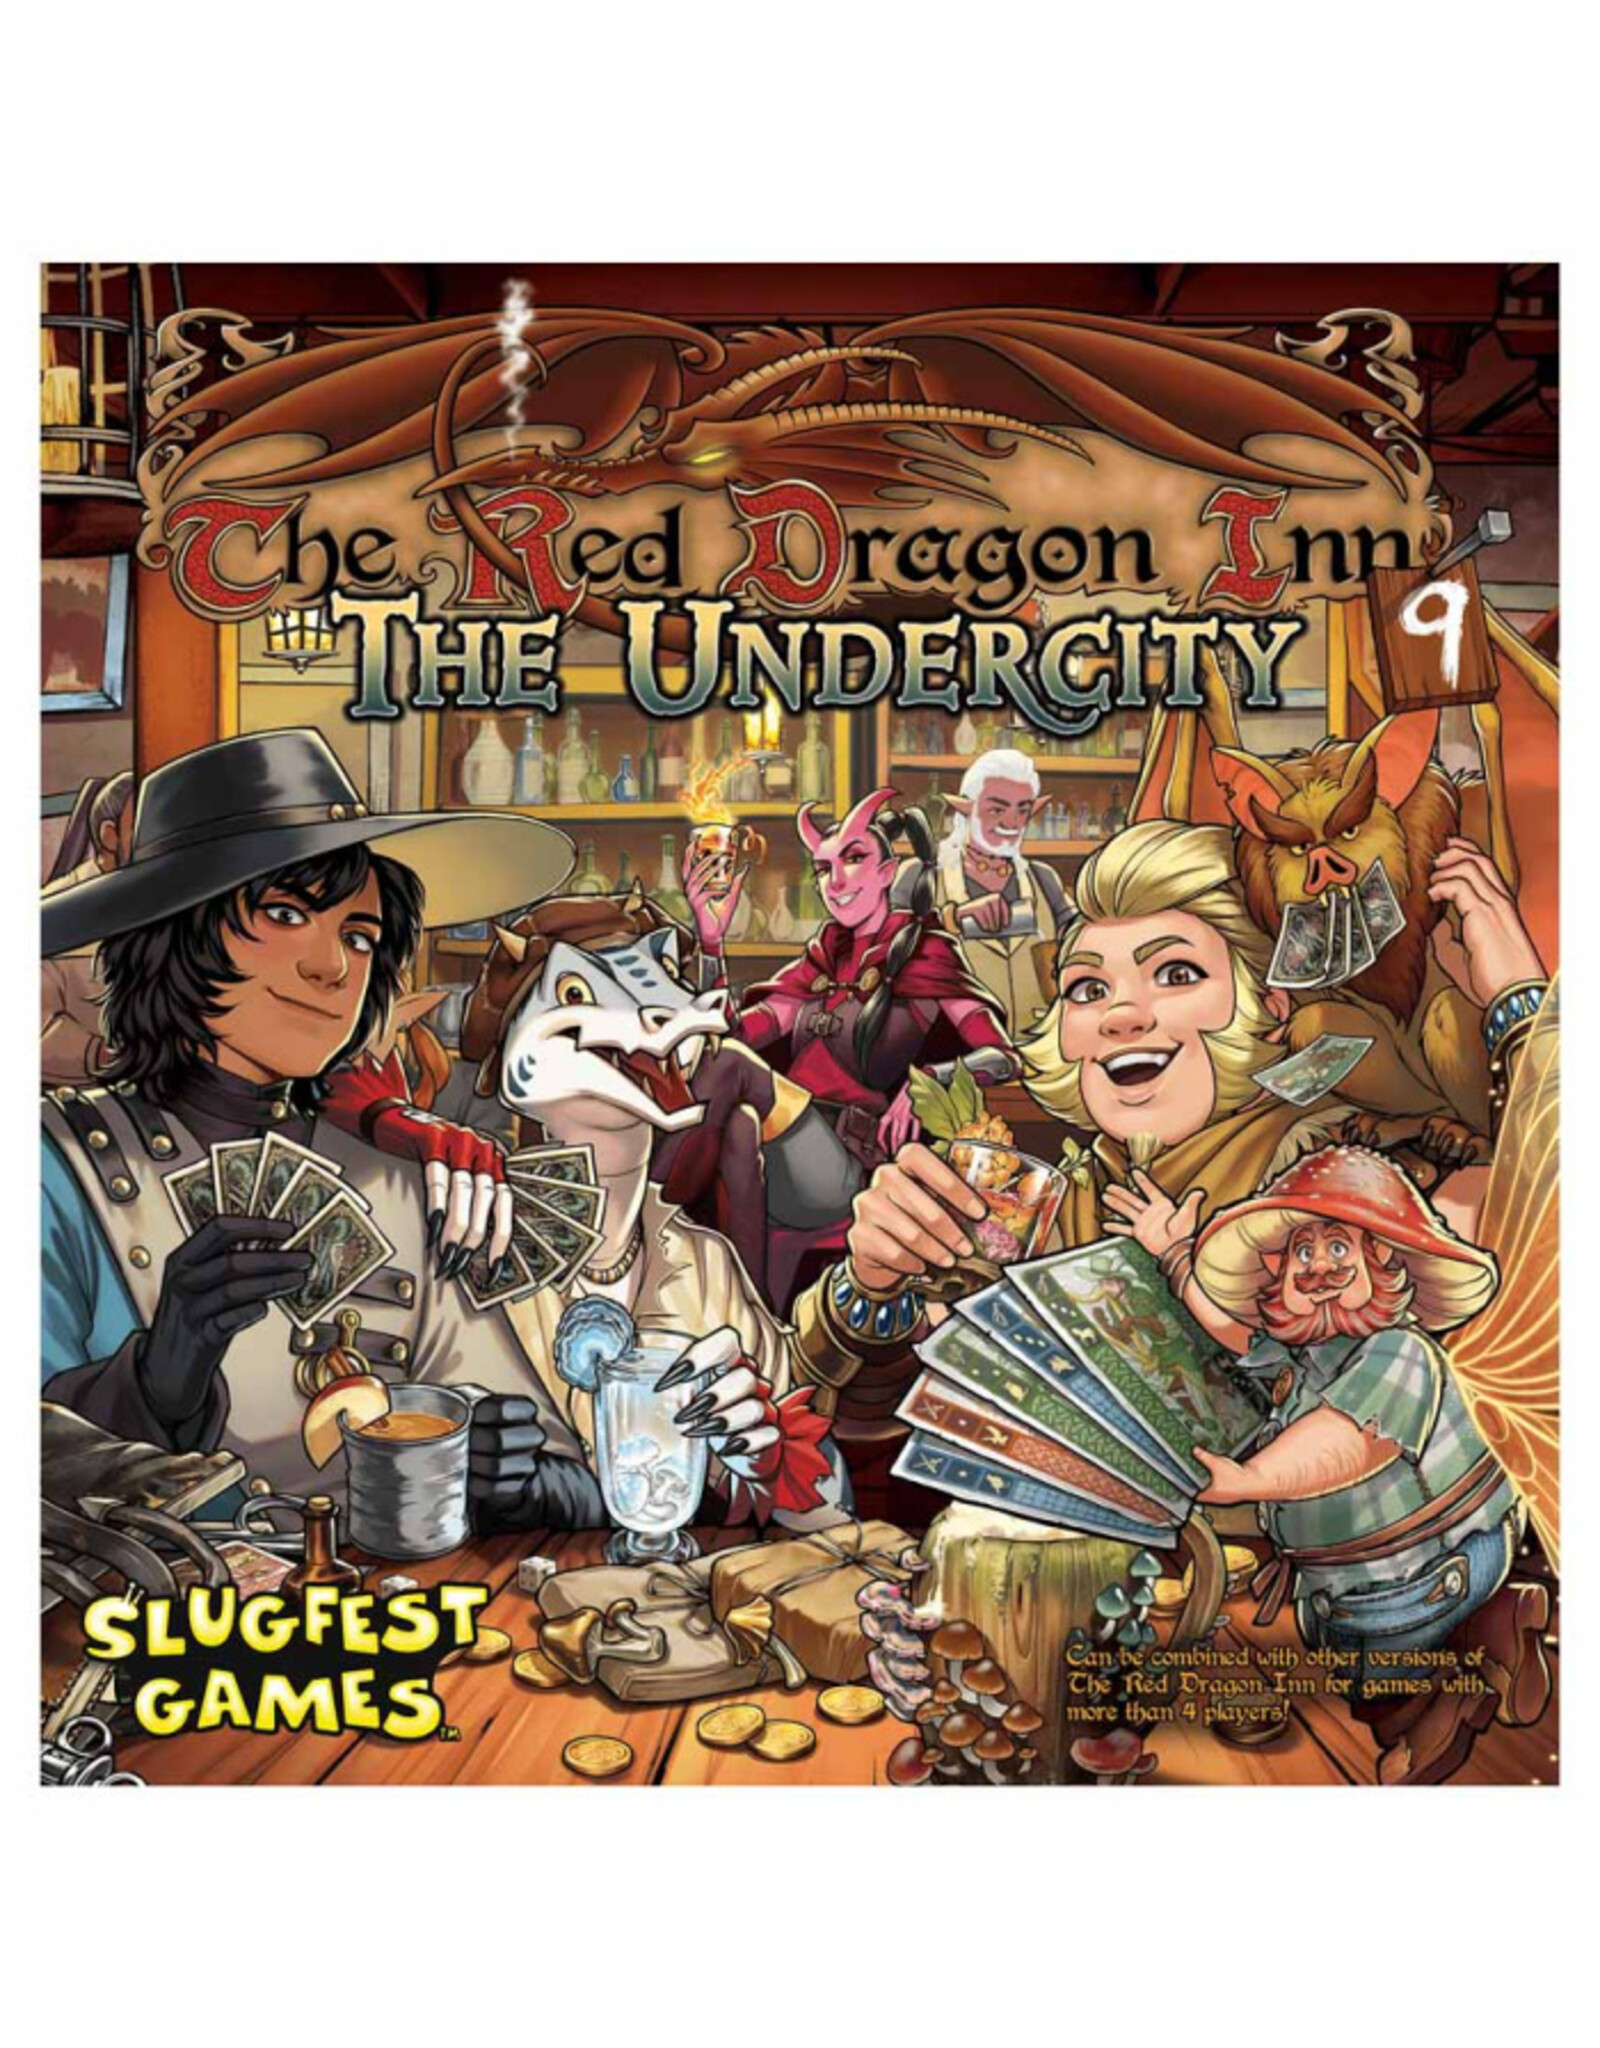 Slugfest Games The Red Dragon Inn 9: The Undercity